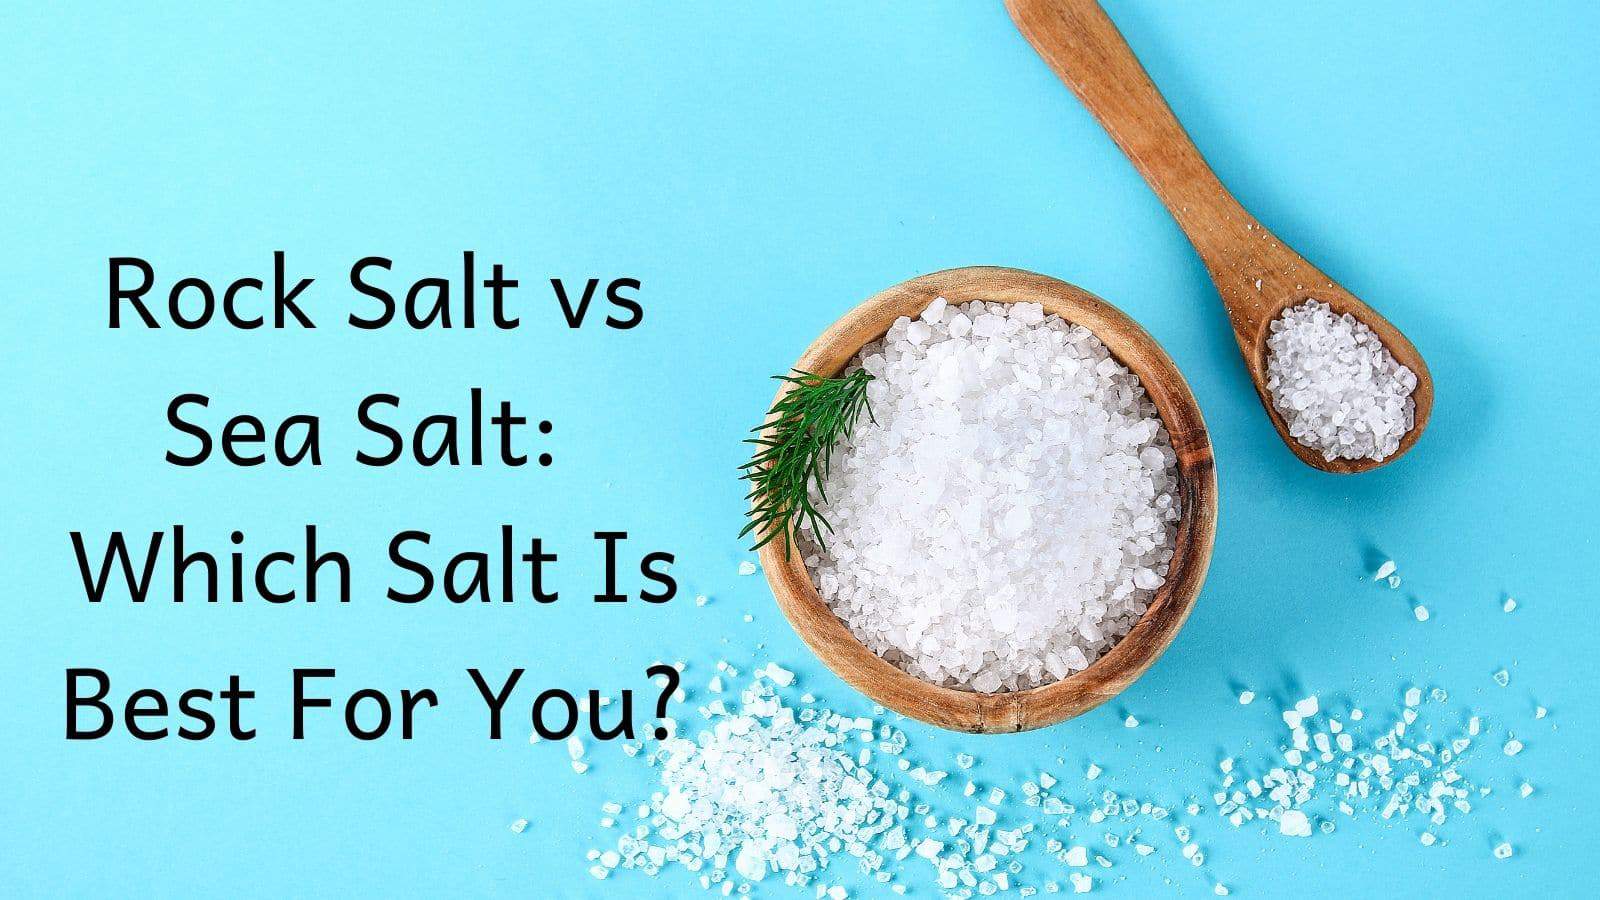 Rock Salt vs Sea Salt: Which Salt is Best For You? - The Kidney Dietitian